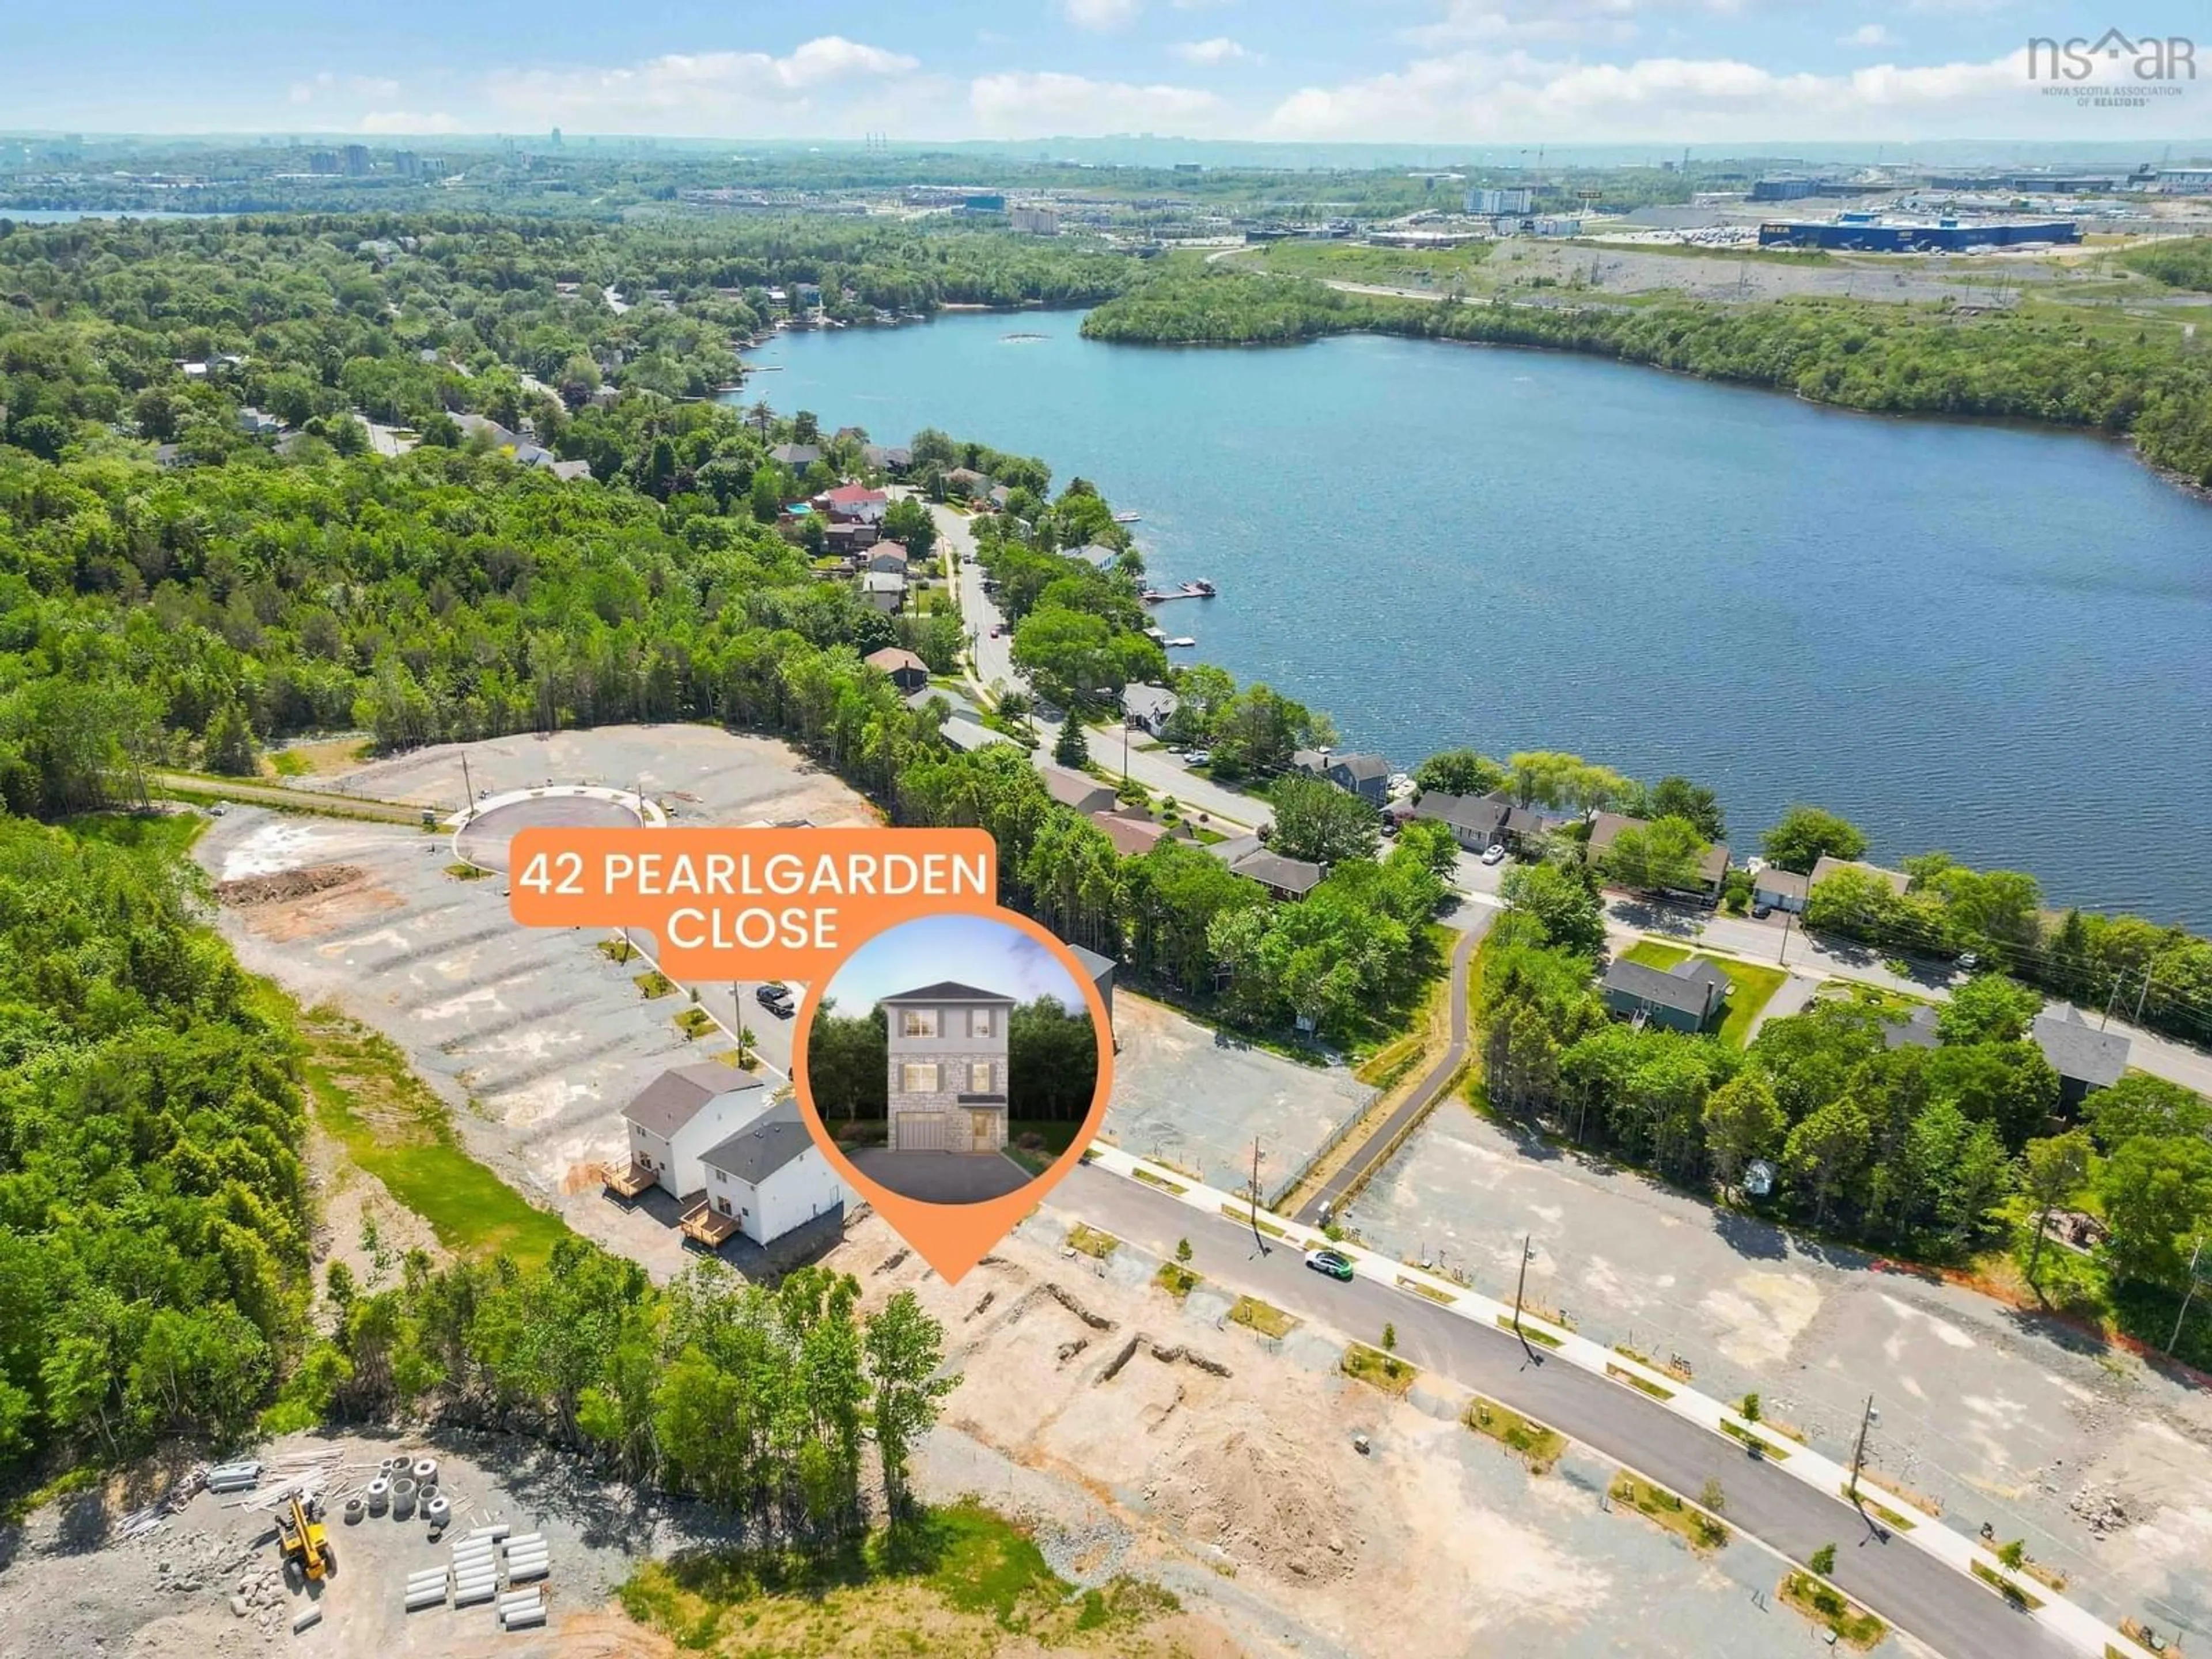 Lakeview for 42 Pearlgarden Close #PC-11, Dartmouth Nova Scotia B2X 2E8